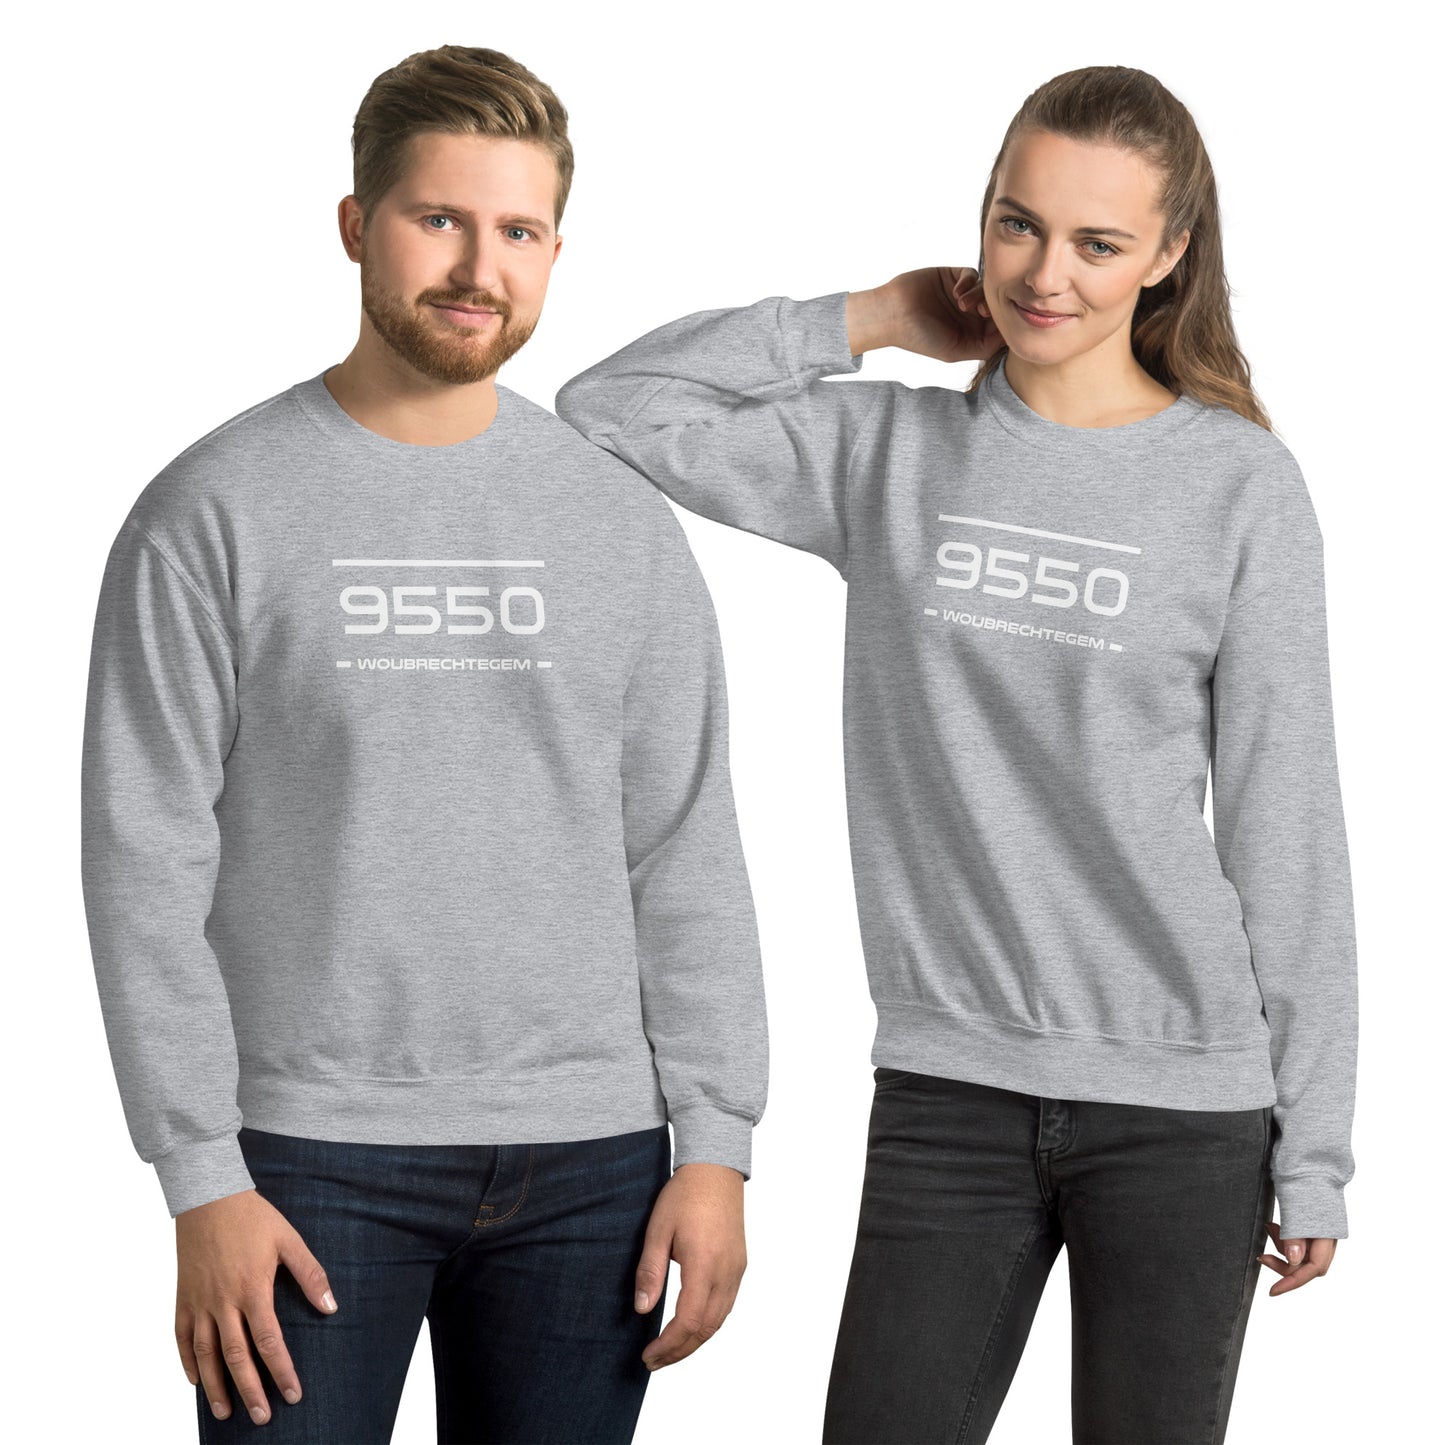 Sweater - 9550 - Woubrechtegem  (M/V)